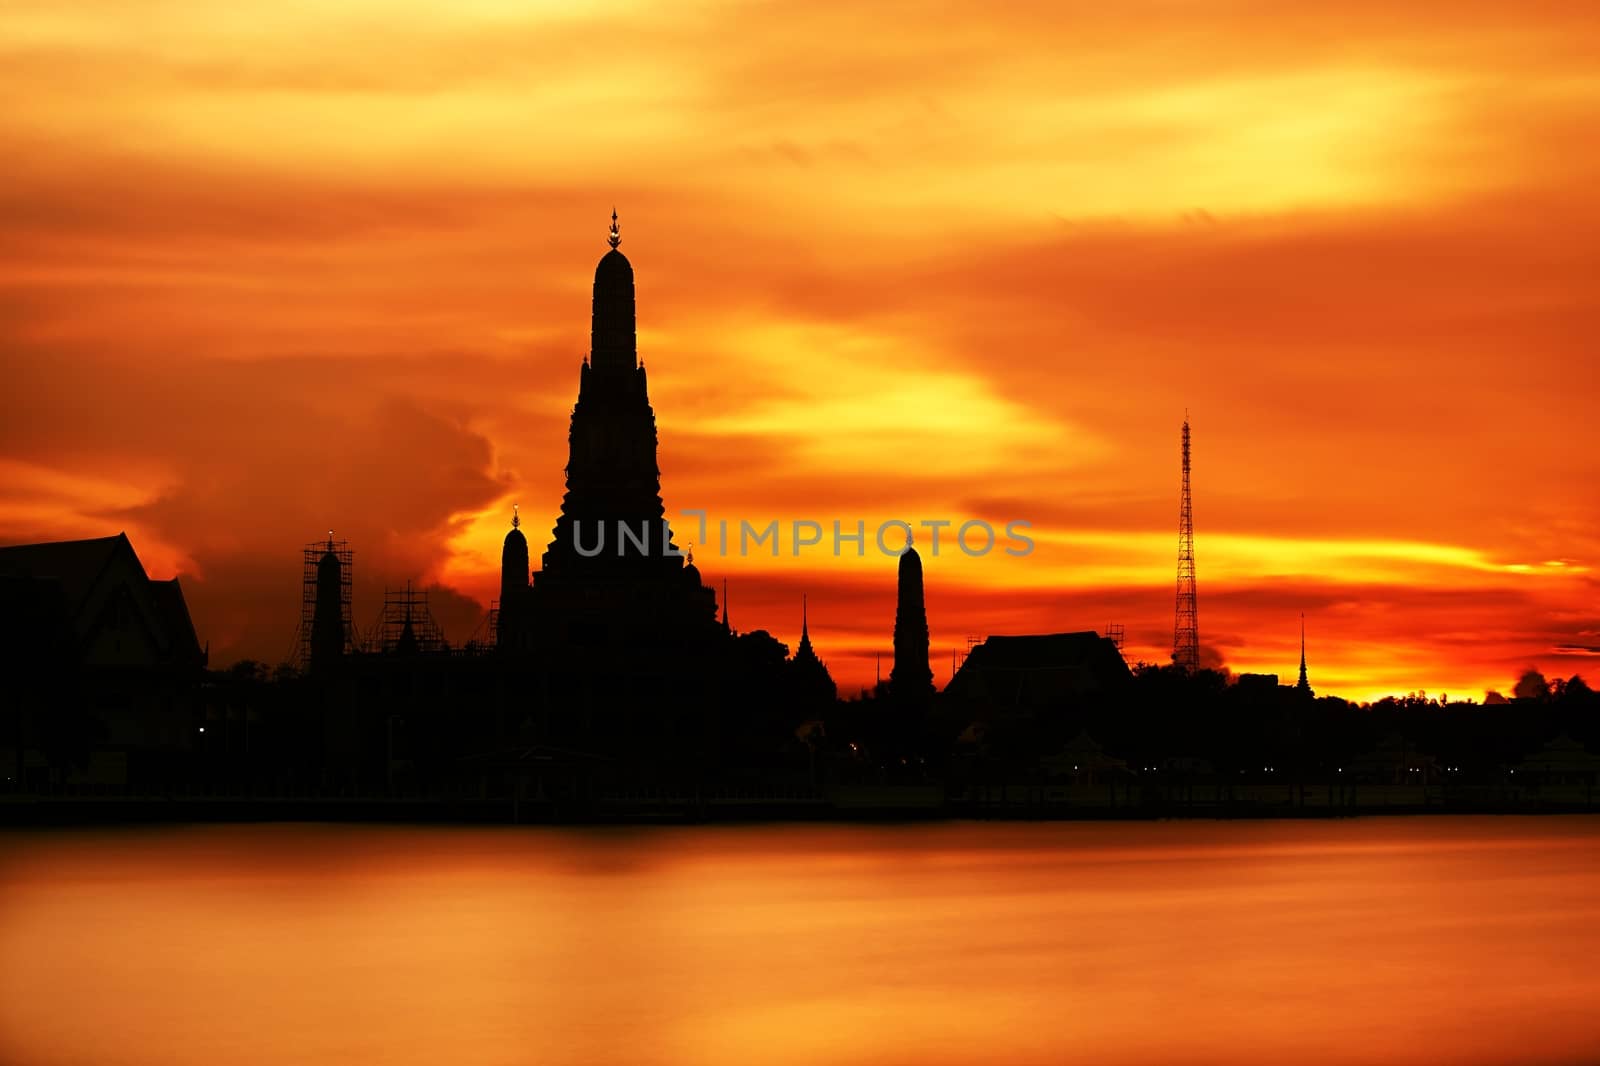 Temple Wat Arun in sunset - Bangkok, Thailand 